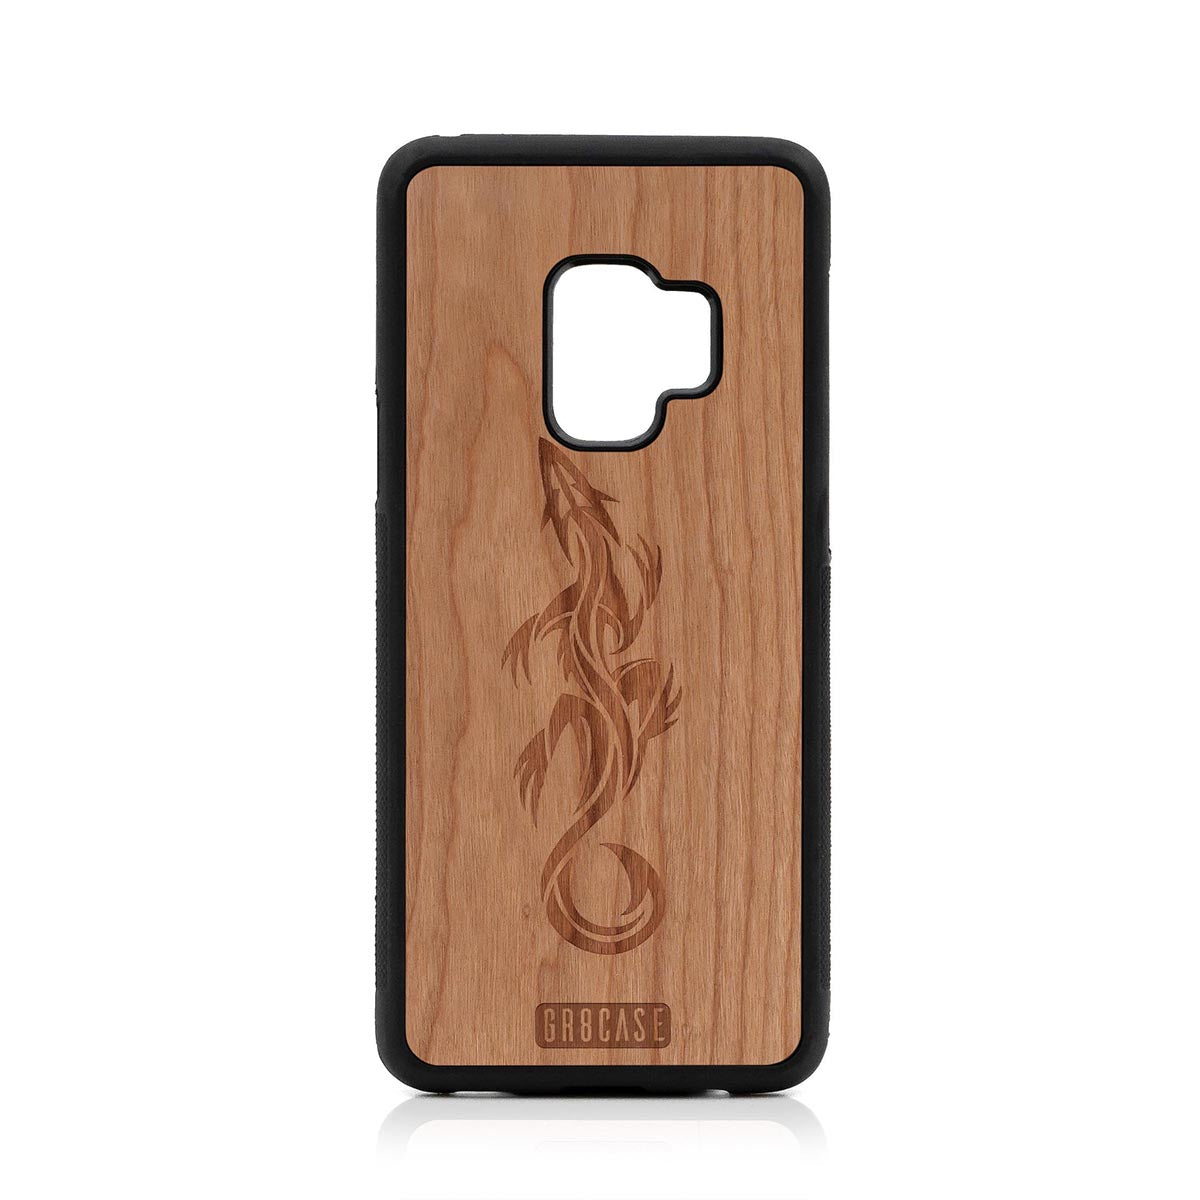 Lizard Design Wood Case Samsung Galaxy S9 by GR8CASE